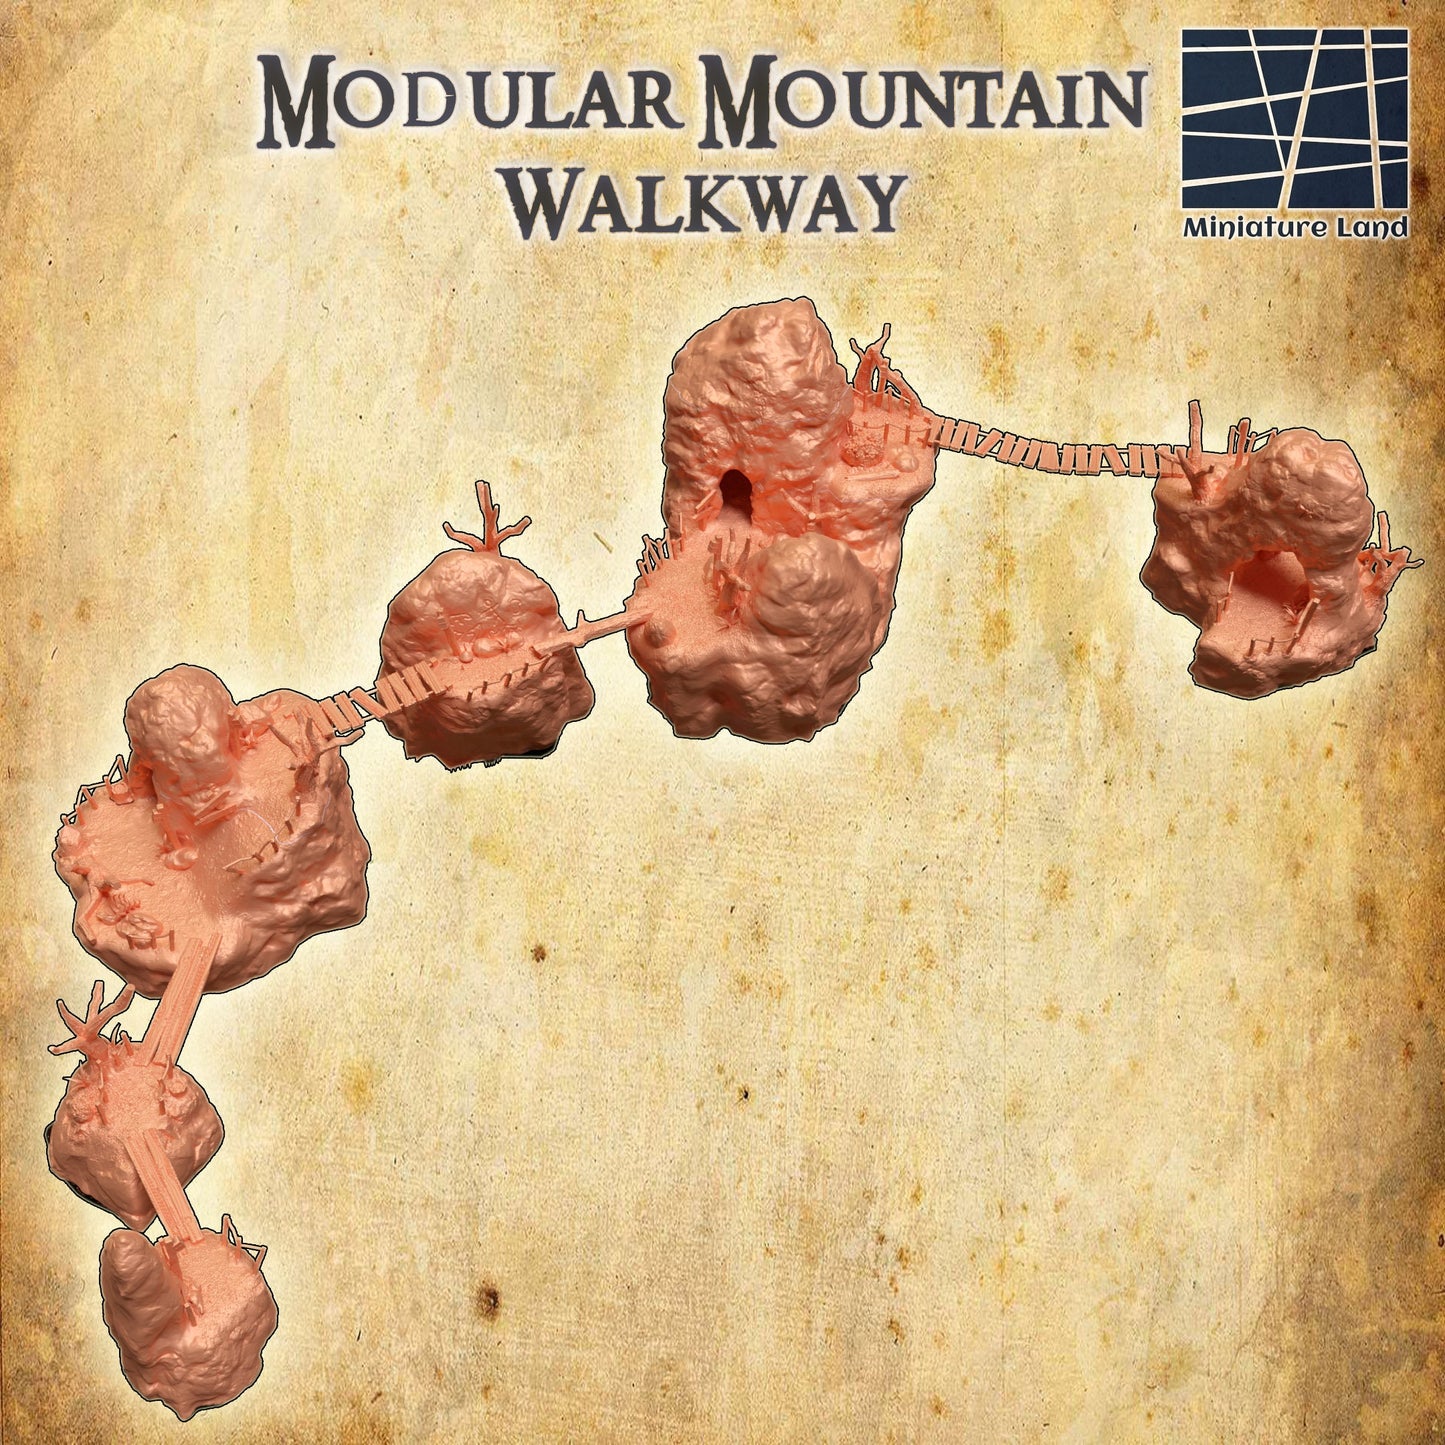 Mountain Walkway, modular bridges, mountain bridges